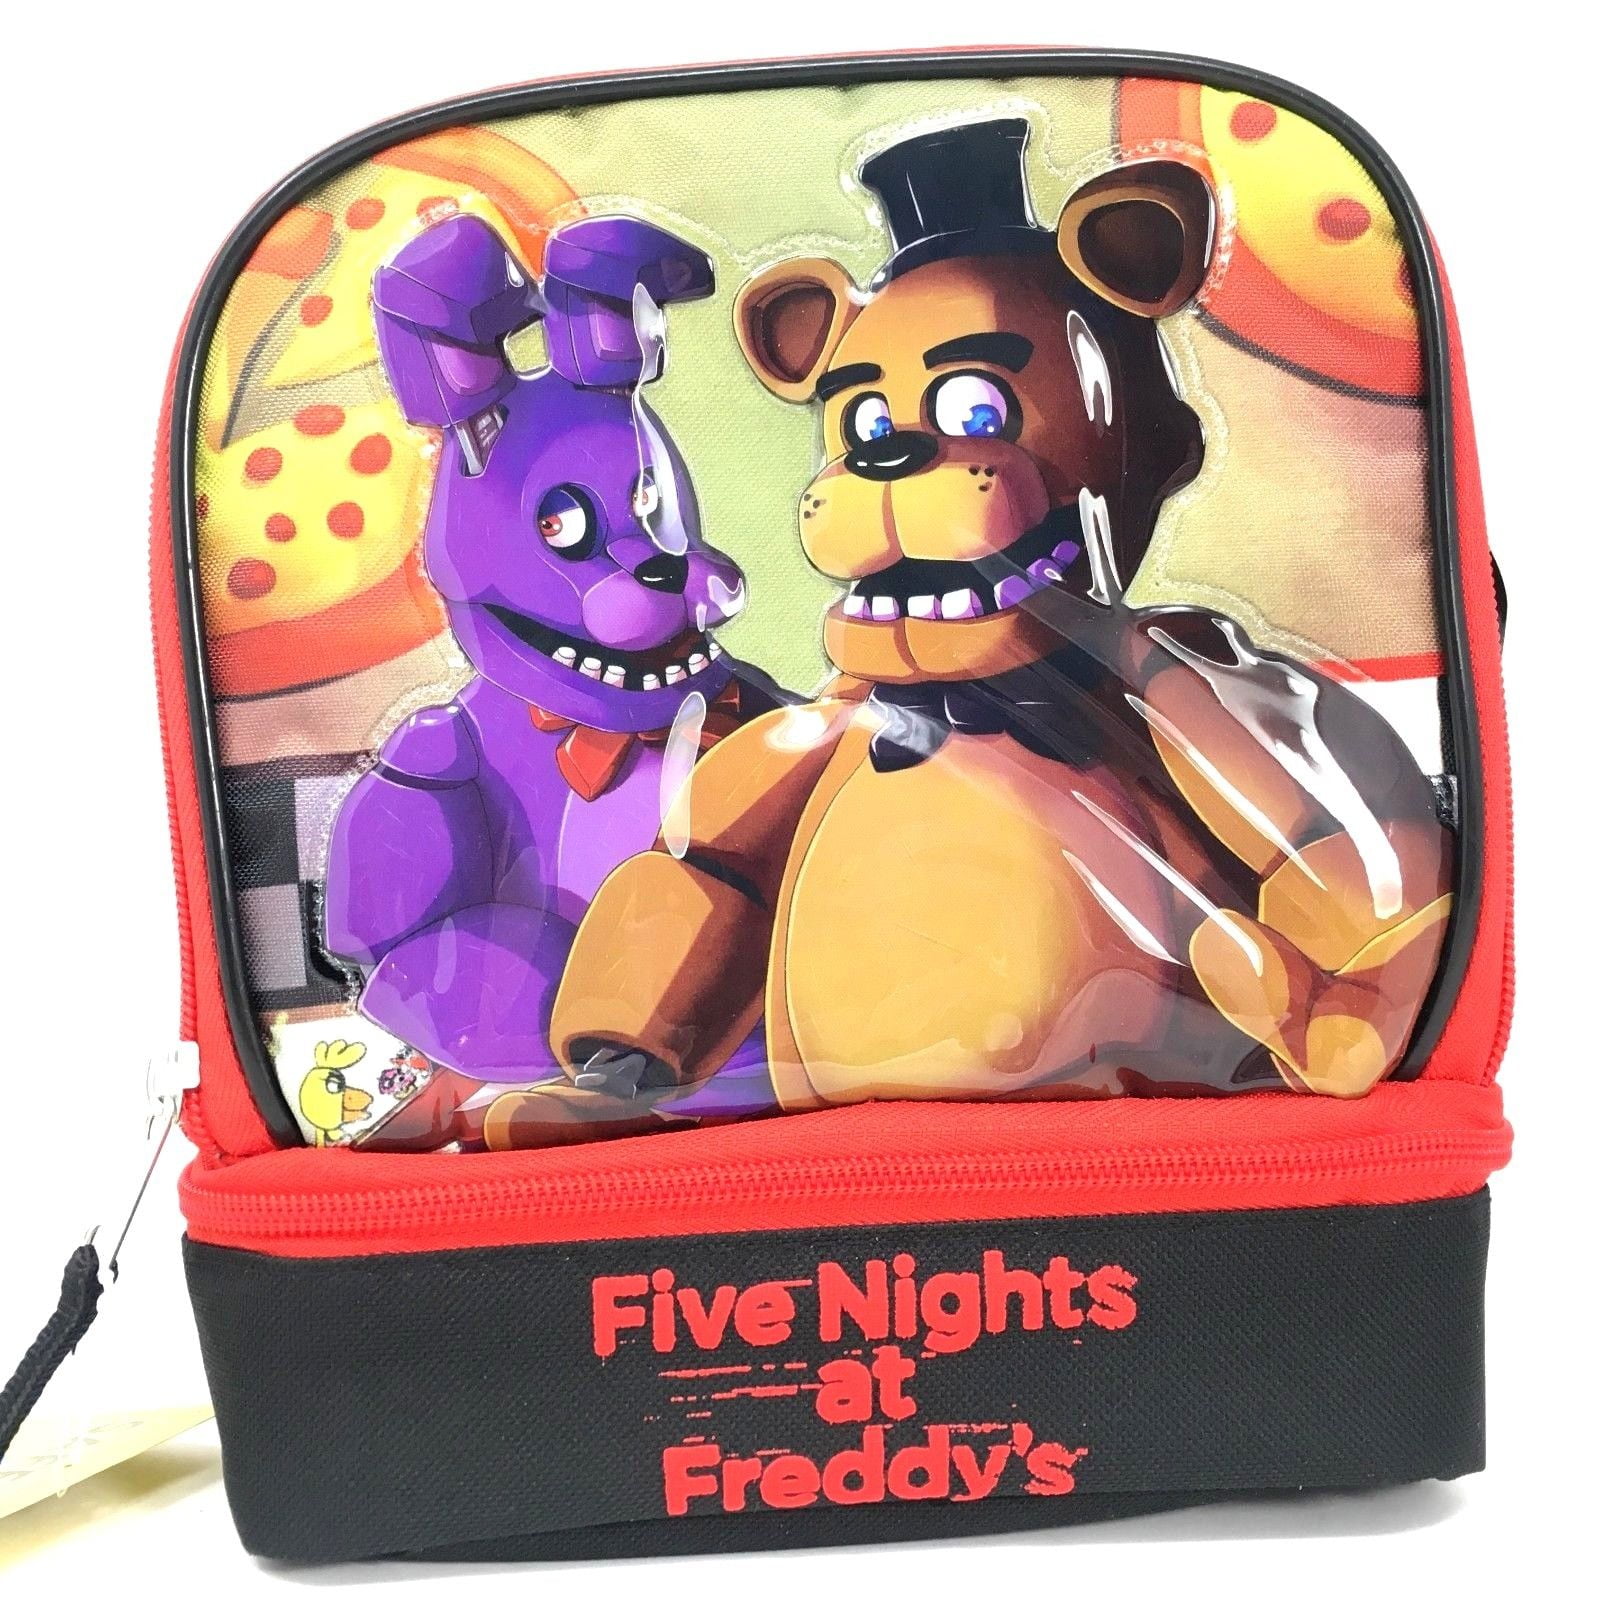 Scott Cawthon NEW Arrive Five Nights at Freddy's Lunch Bag/Box 2018Scott Games 